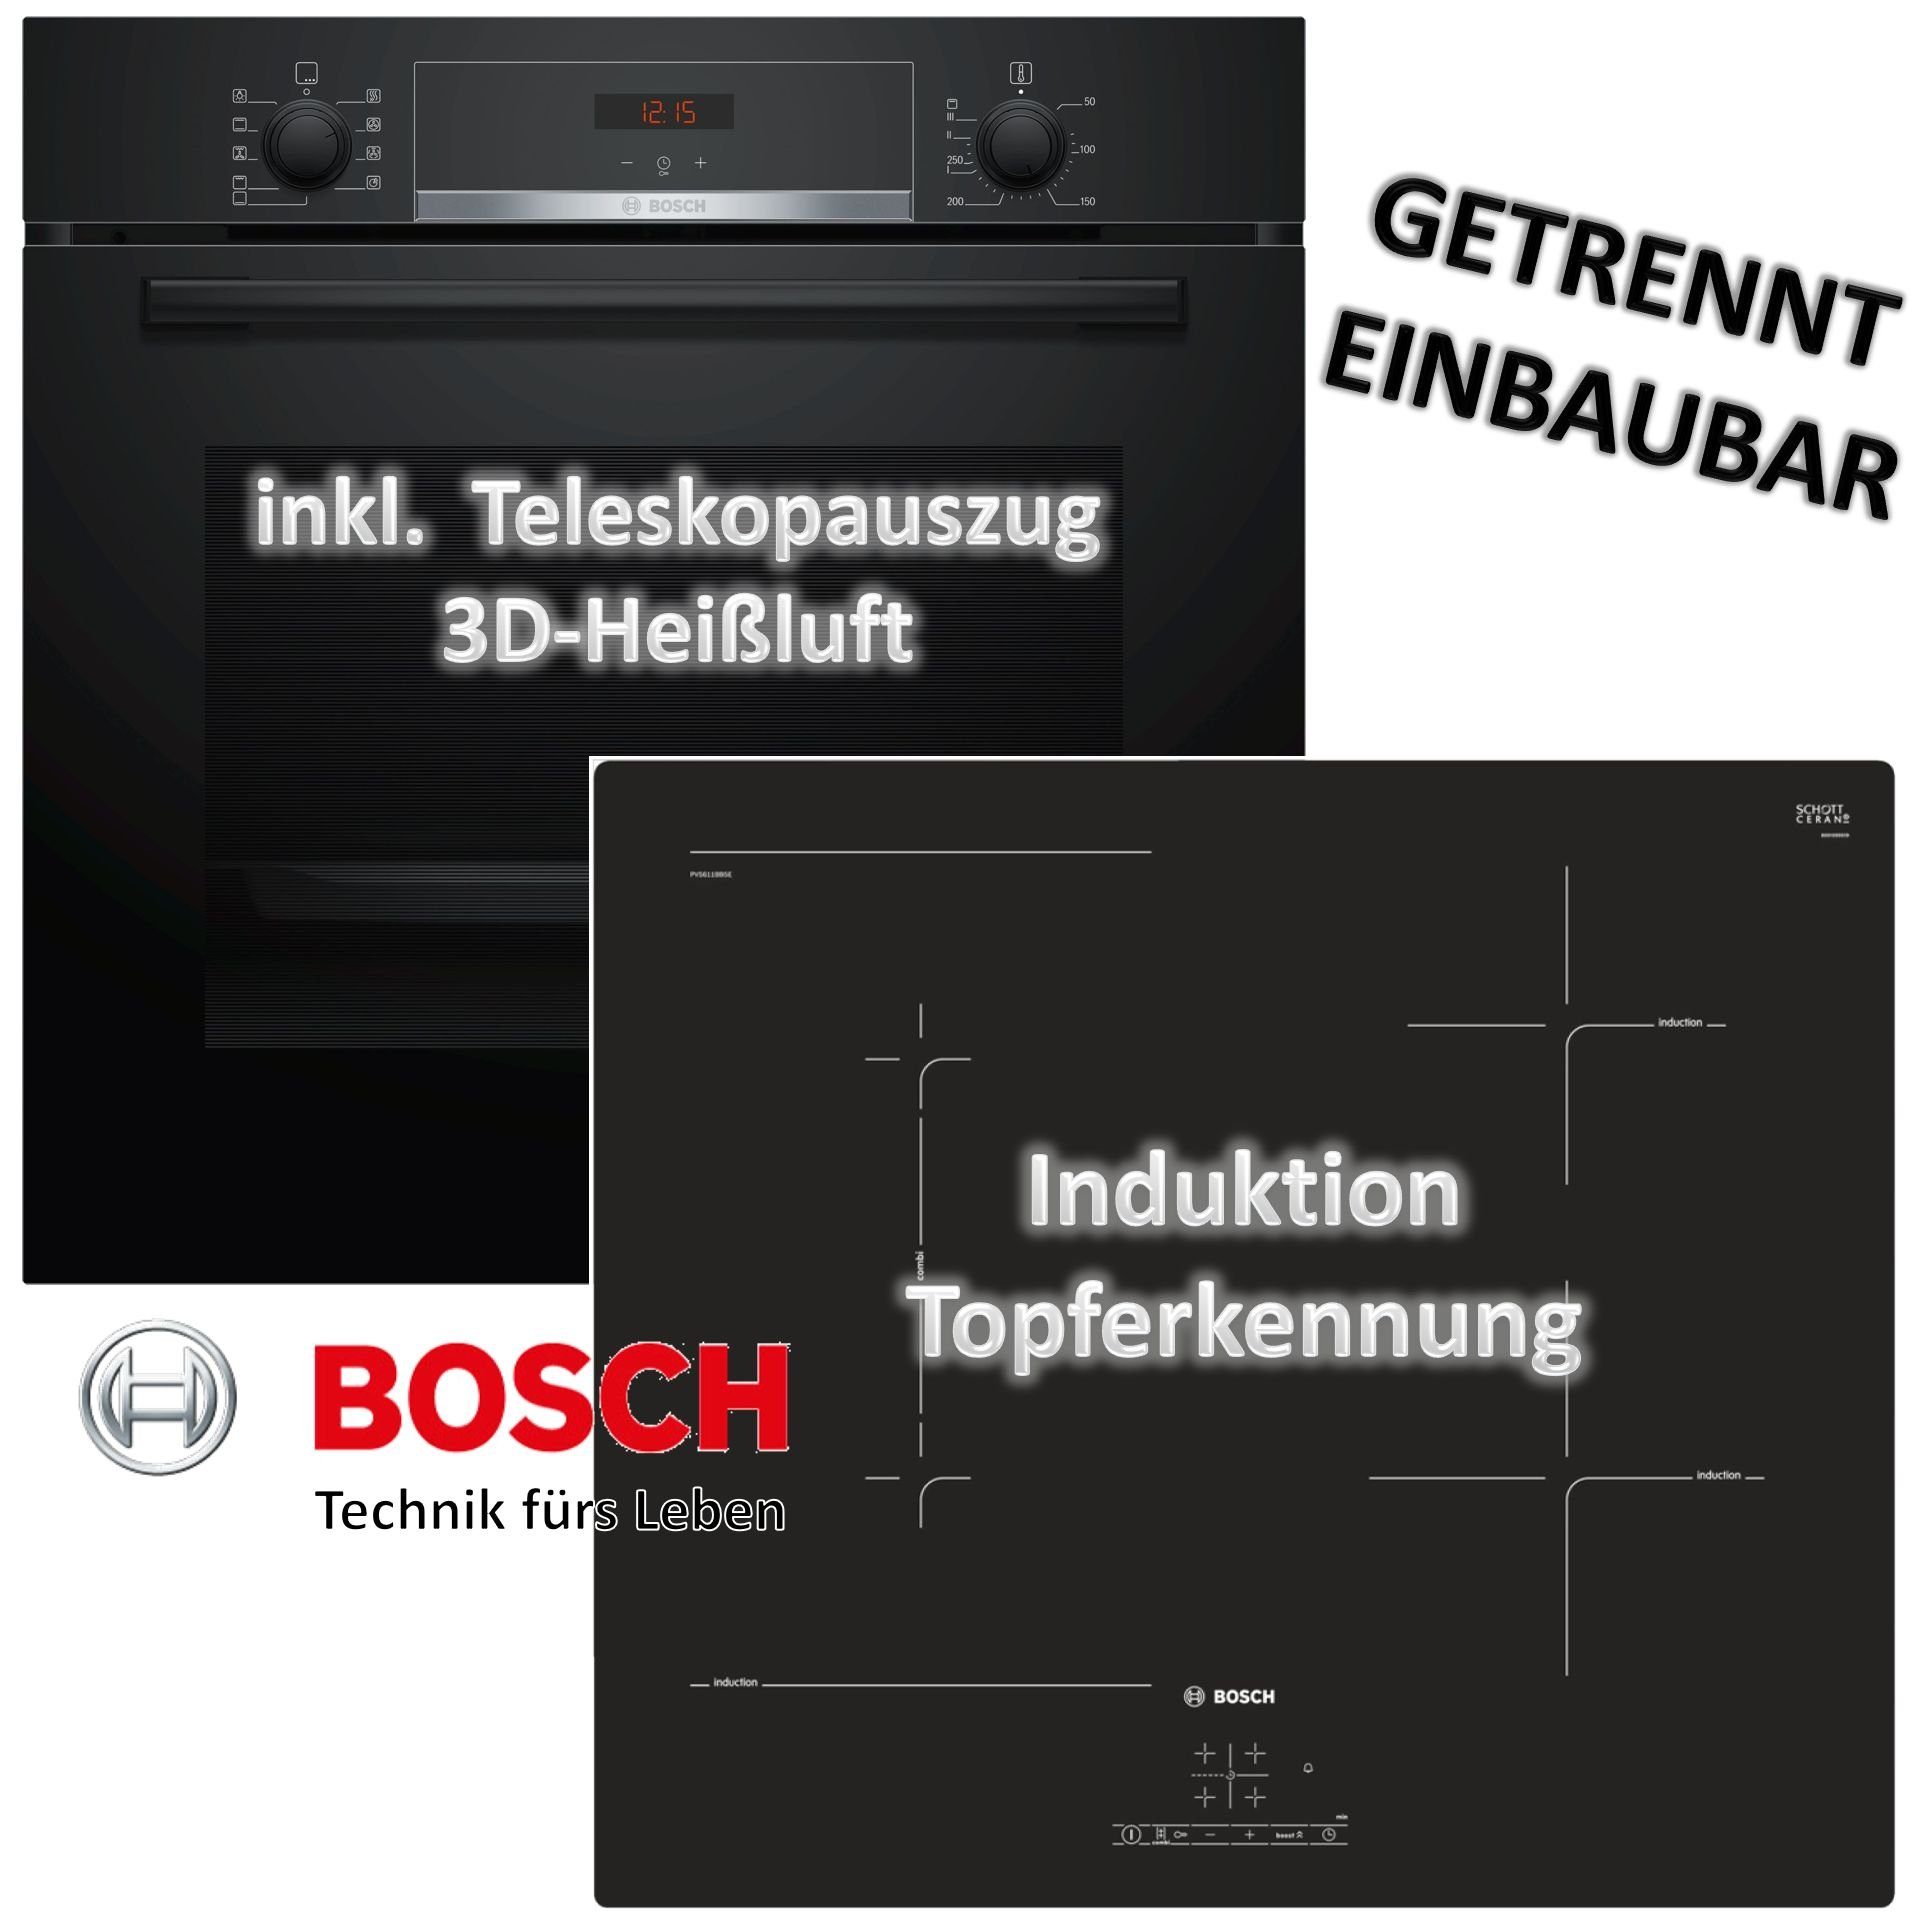 Induktionskochfeld autark Backofen cm Flex-Induktions-Herd-Set Teleskopauszug BOSCH mit 60